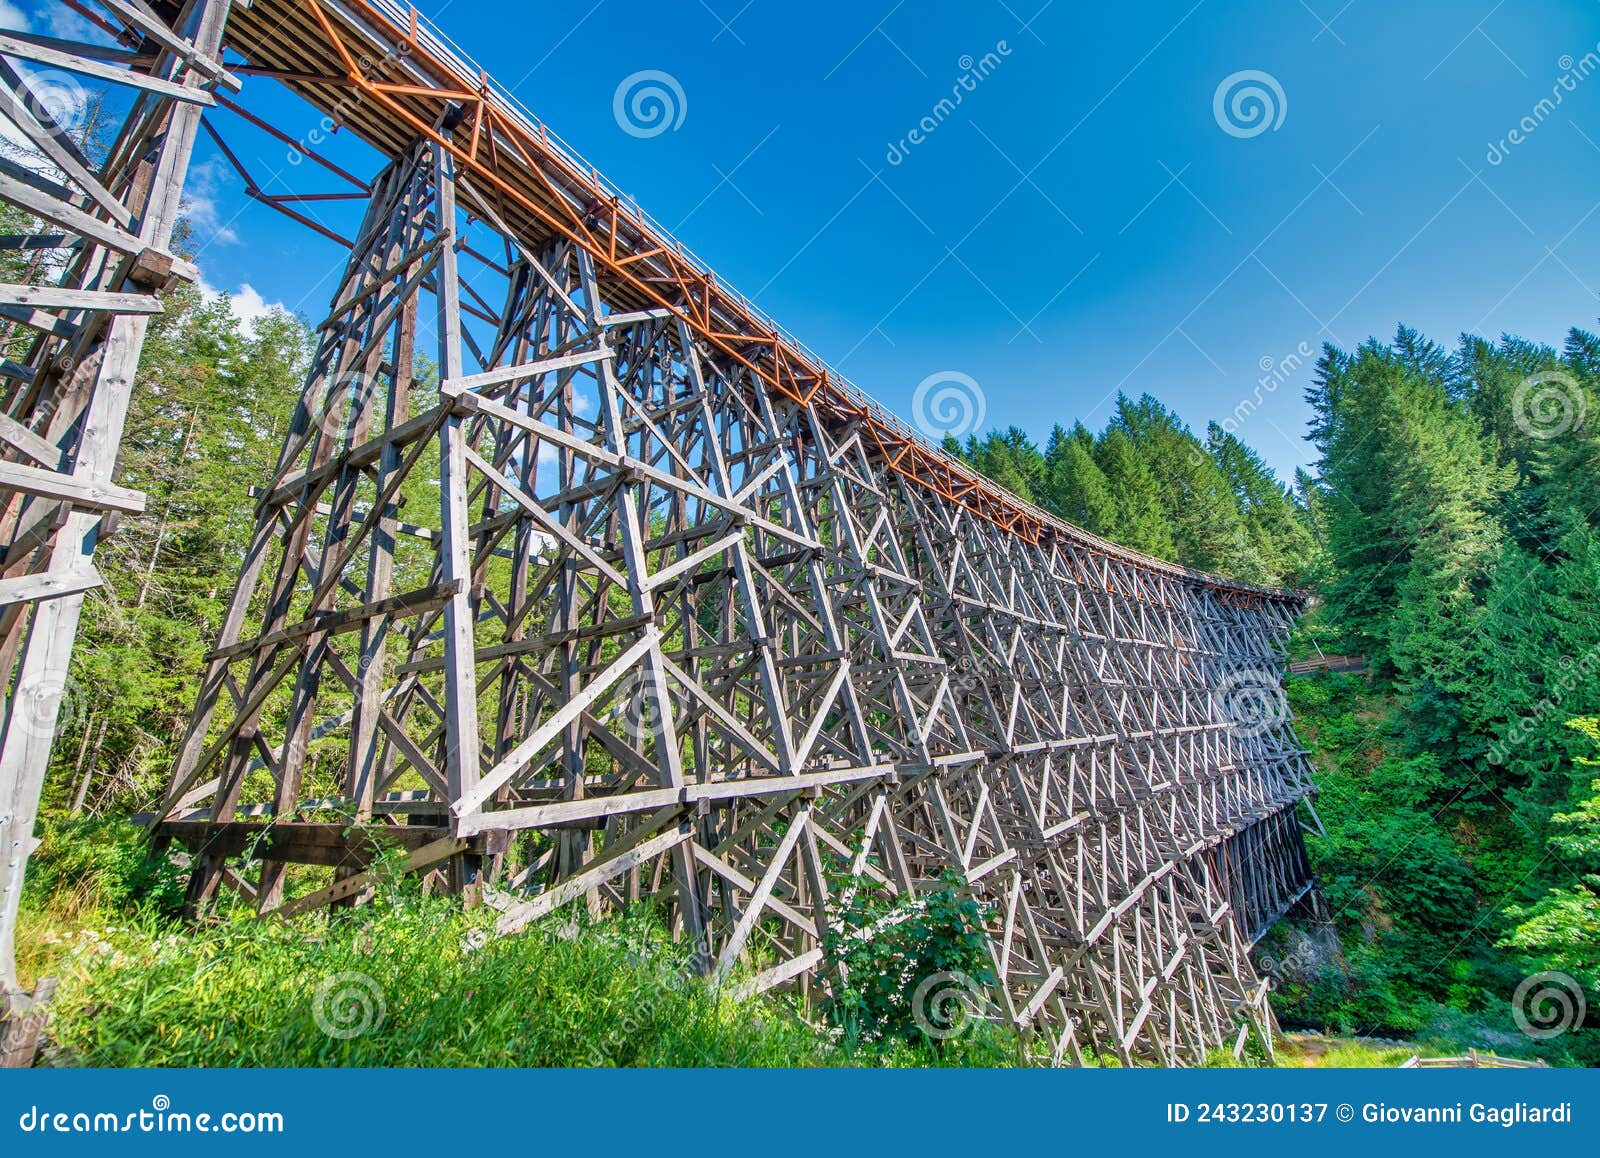 view of restored historic railroad bridge kinsol trestle (koksilah river trestle) made of wooden boards - vancouver island